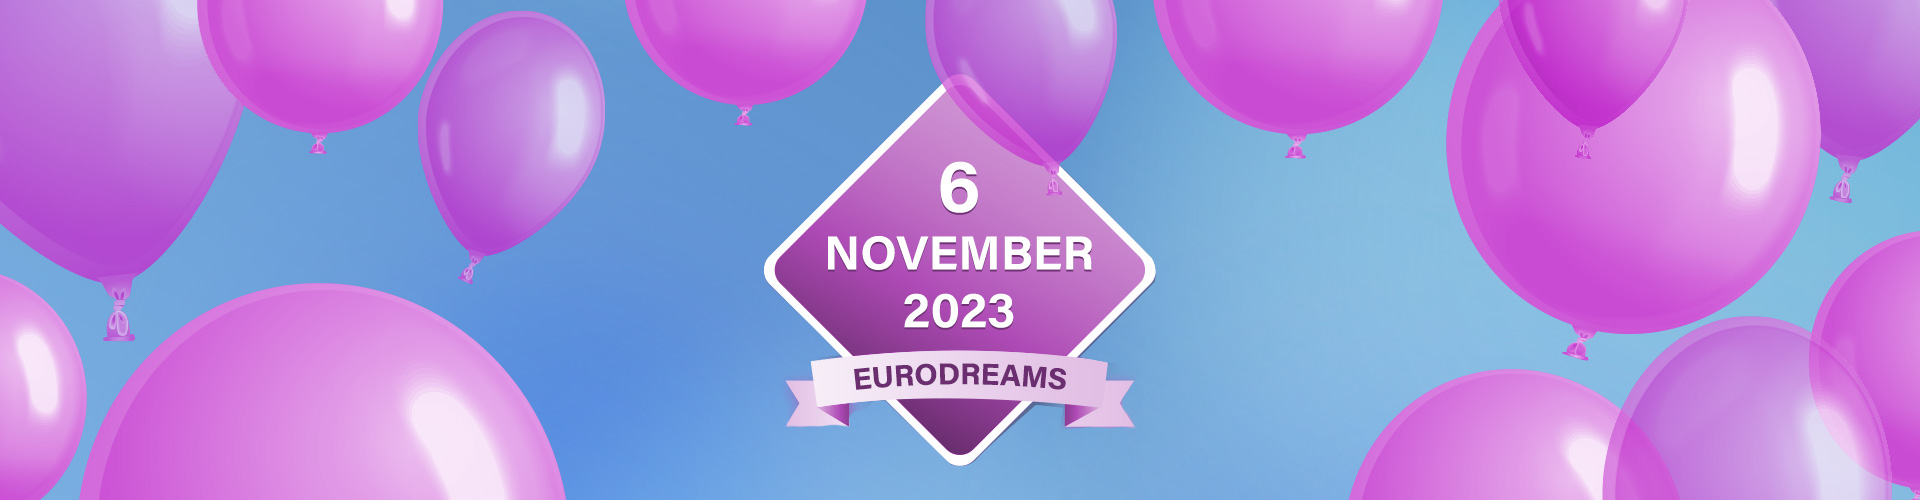 First Eurodreams Lottery Draw - 6 November 2023